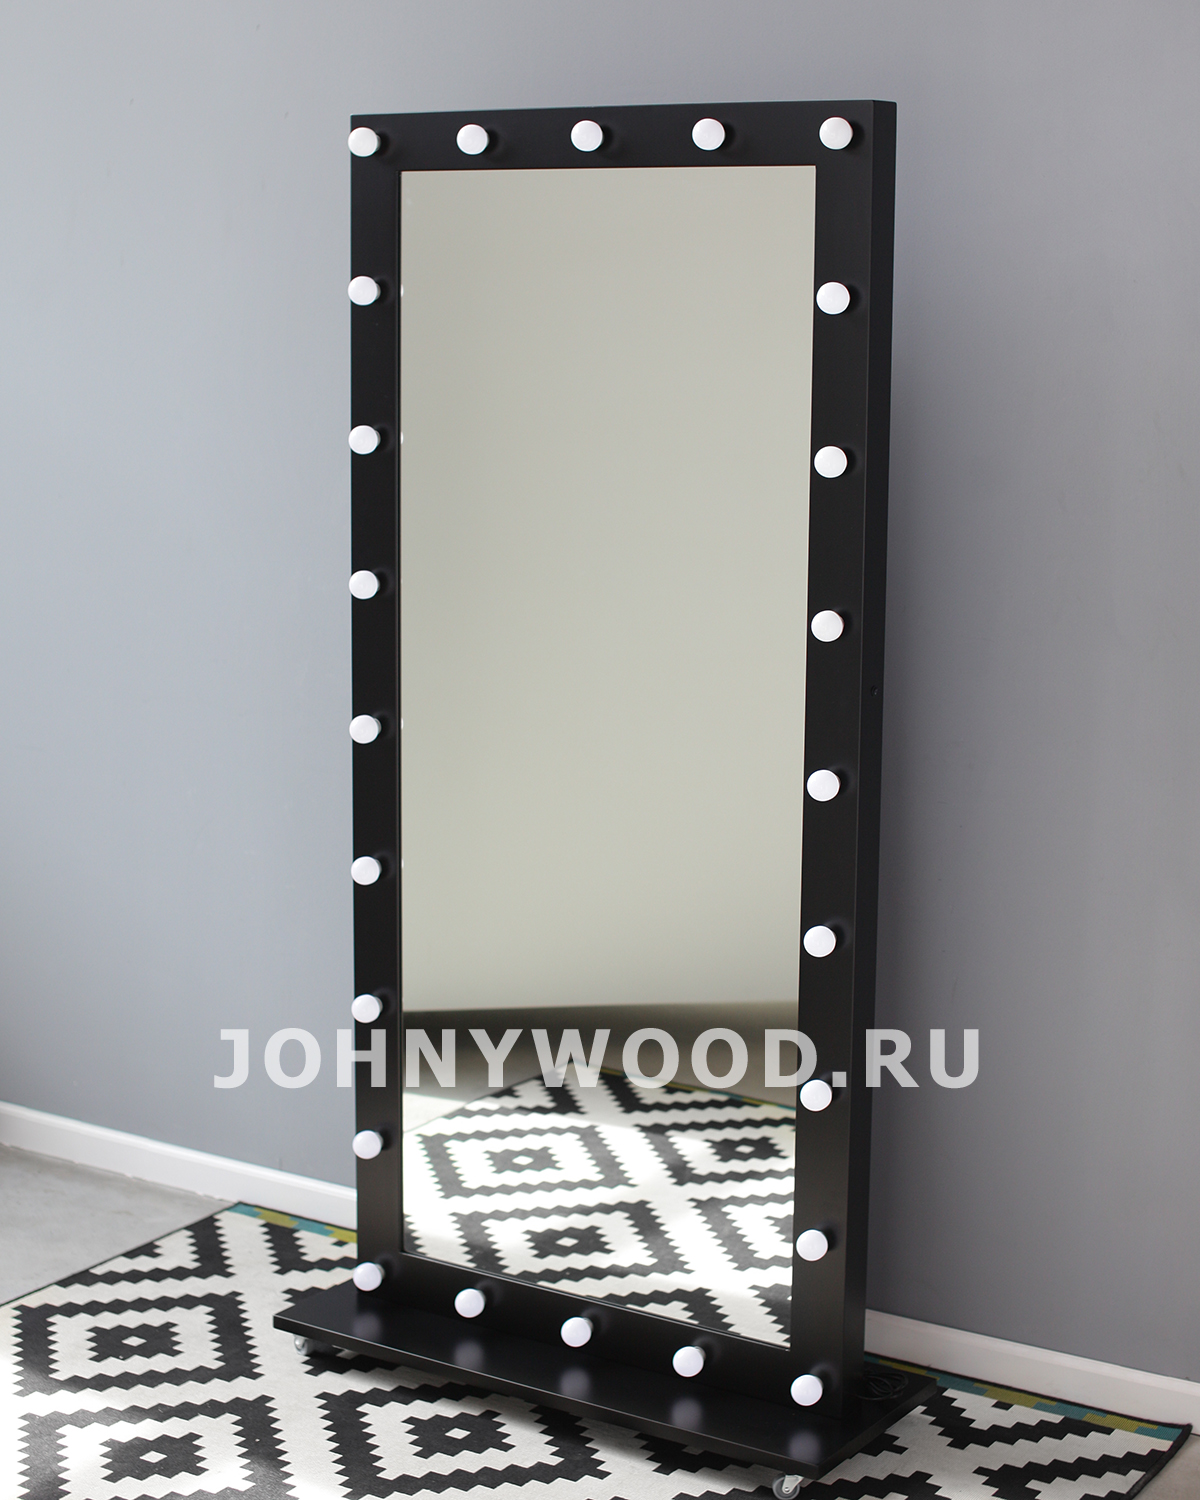 Фото зеркала в полный рост на подставке с лампочками jw200x95fbwstand Johny Wood